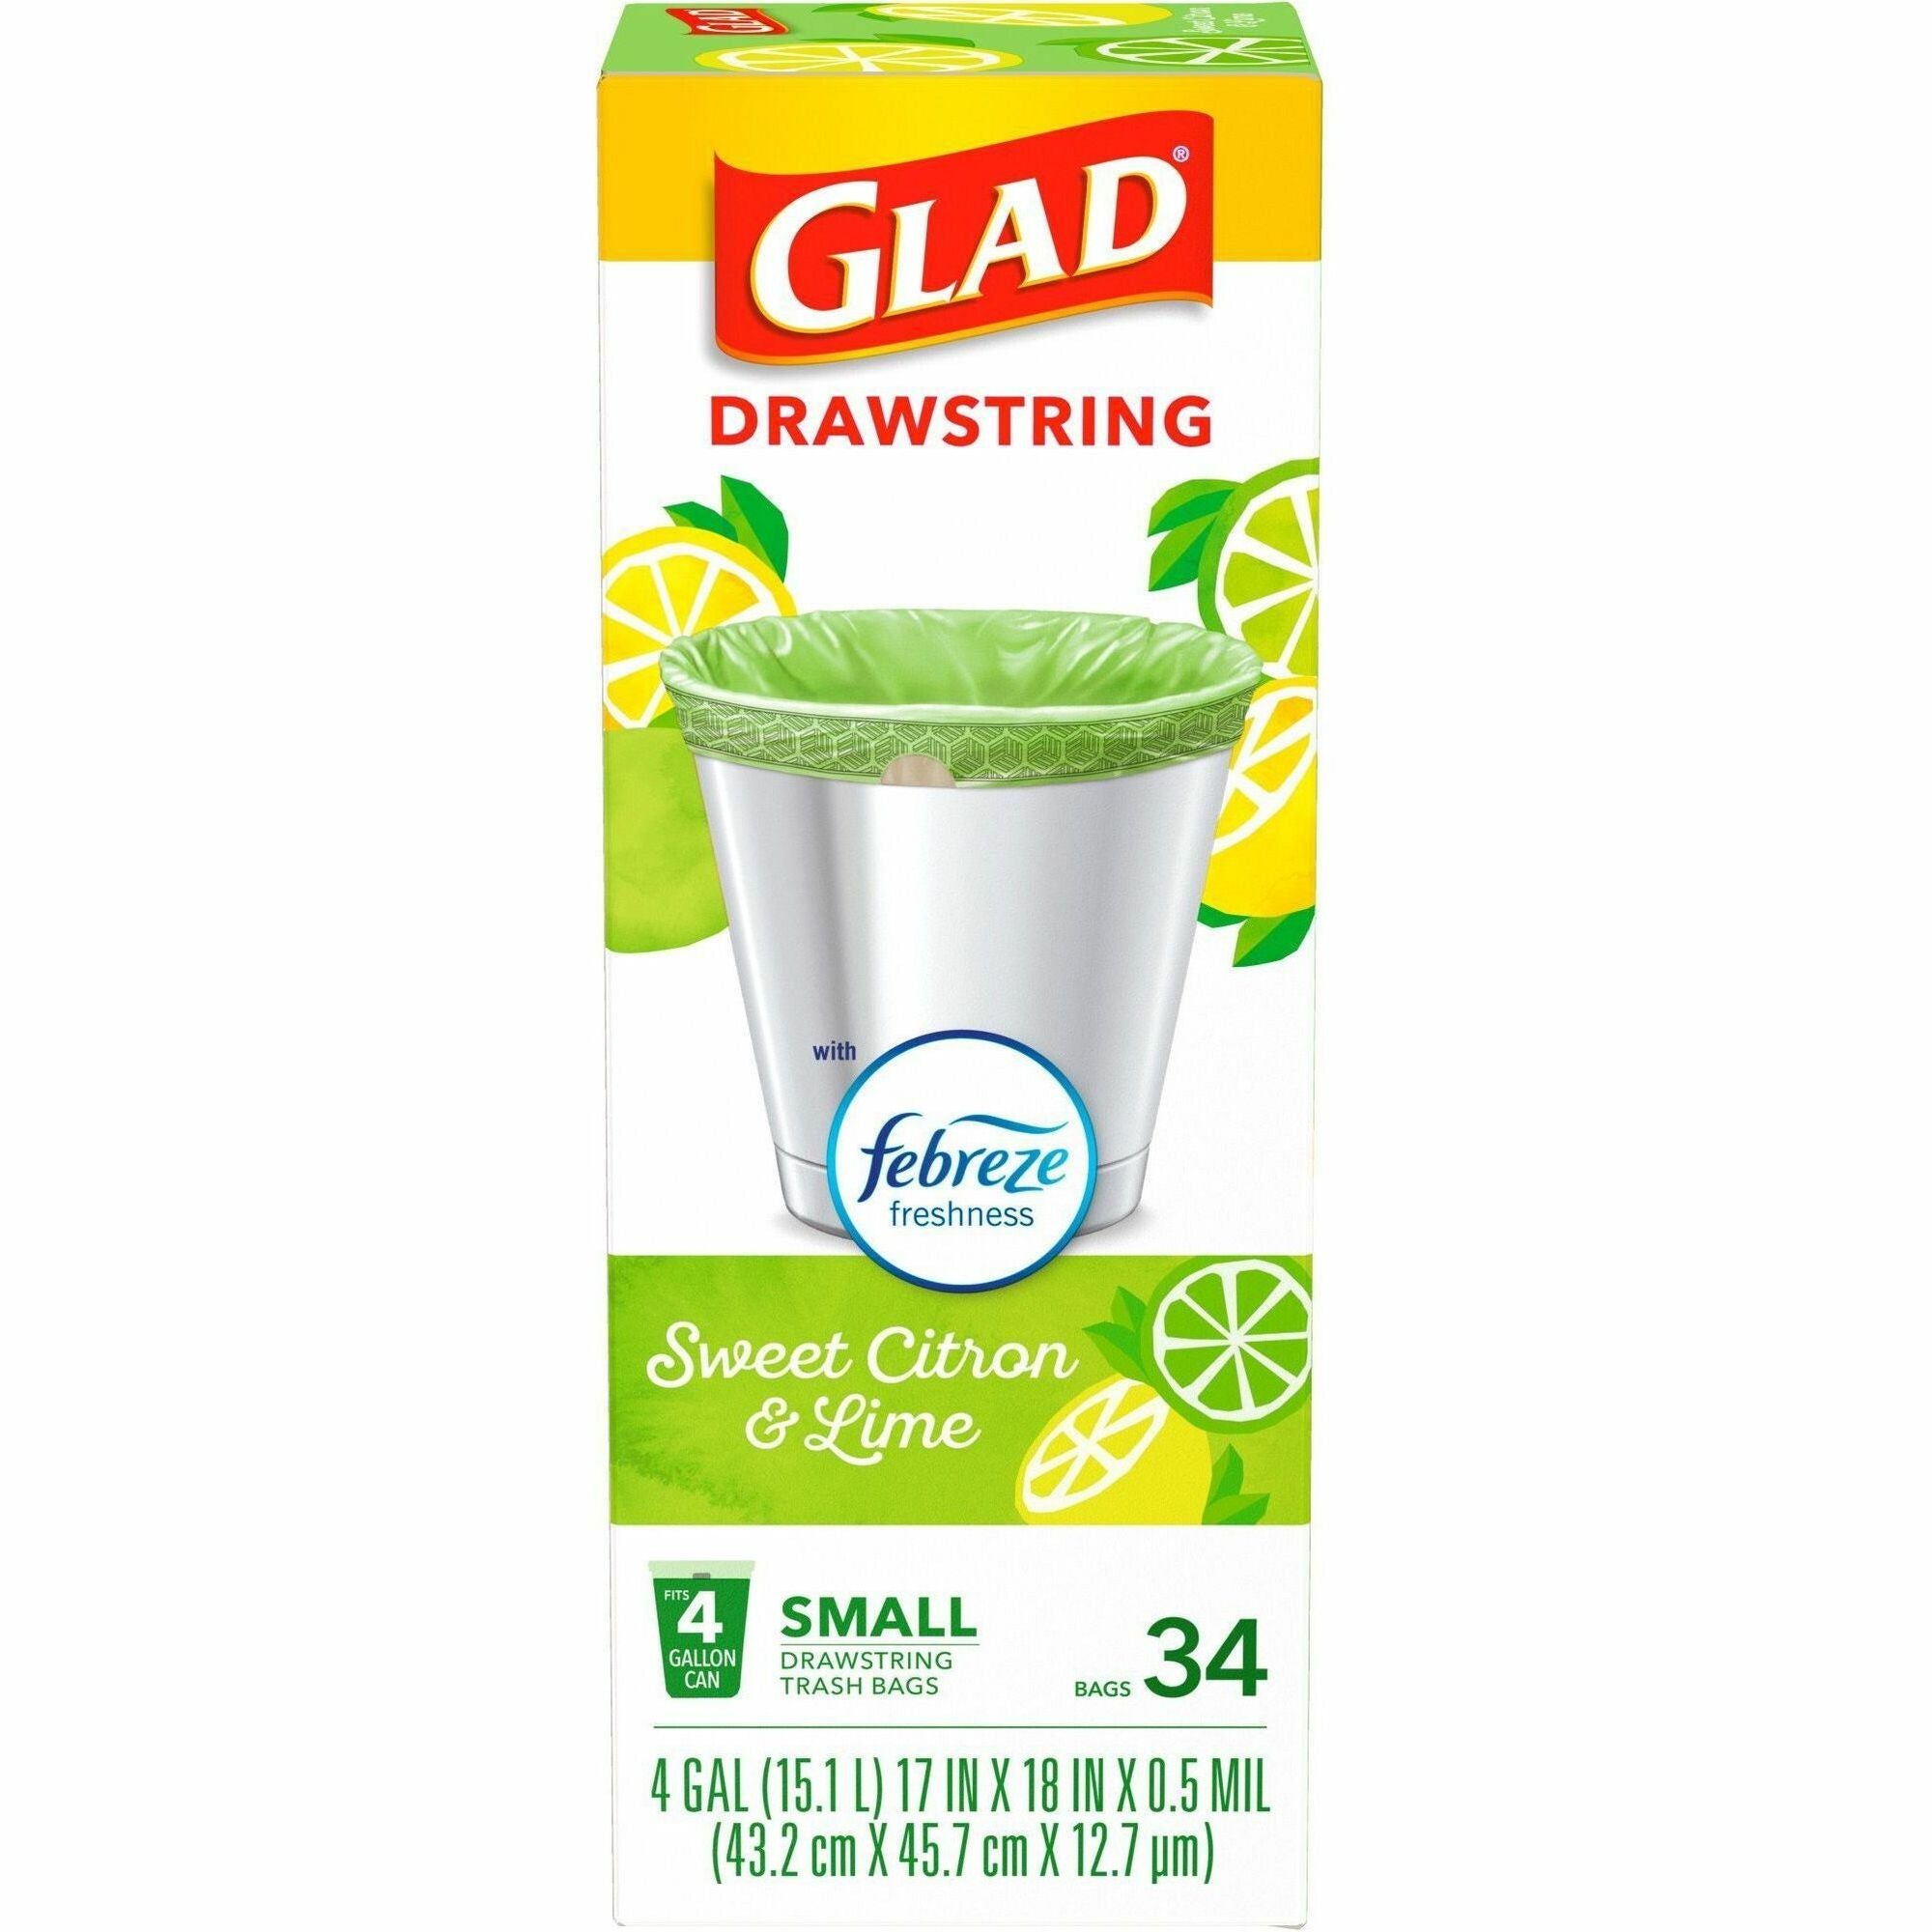 Glad Small Kitchen Drawstring Trash Bags - Febreze Sweet Citron & Lime - 4 gal Capacity - Drawstring Closure - Green - 34/Box - Home Office, Bathroom, Kitchen, Laundry - 1